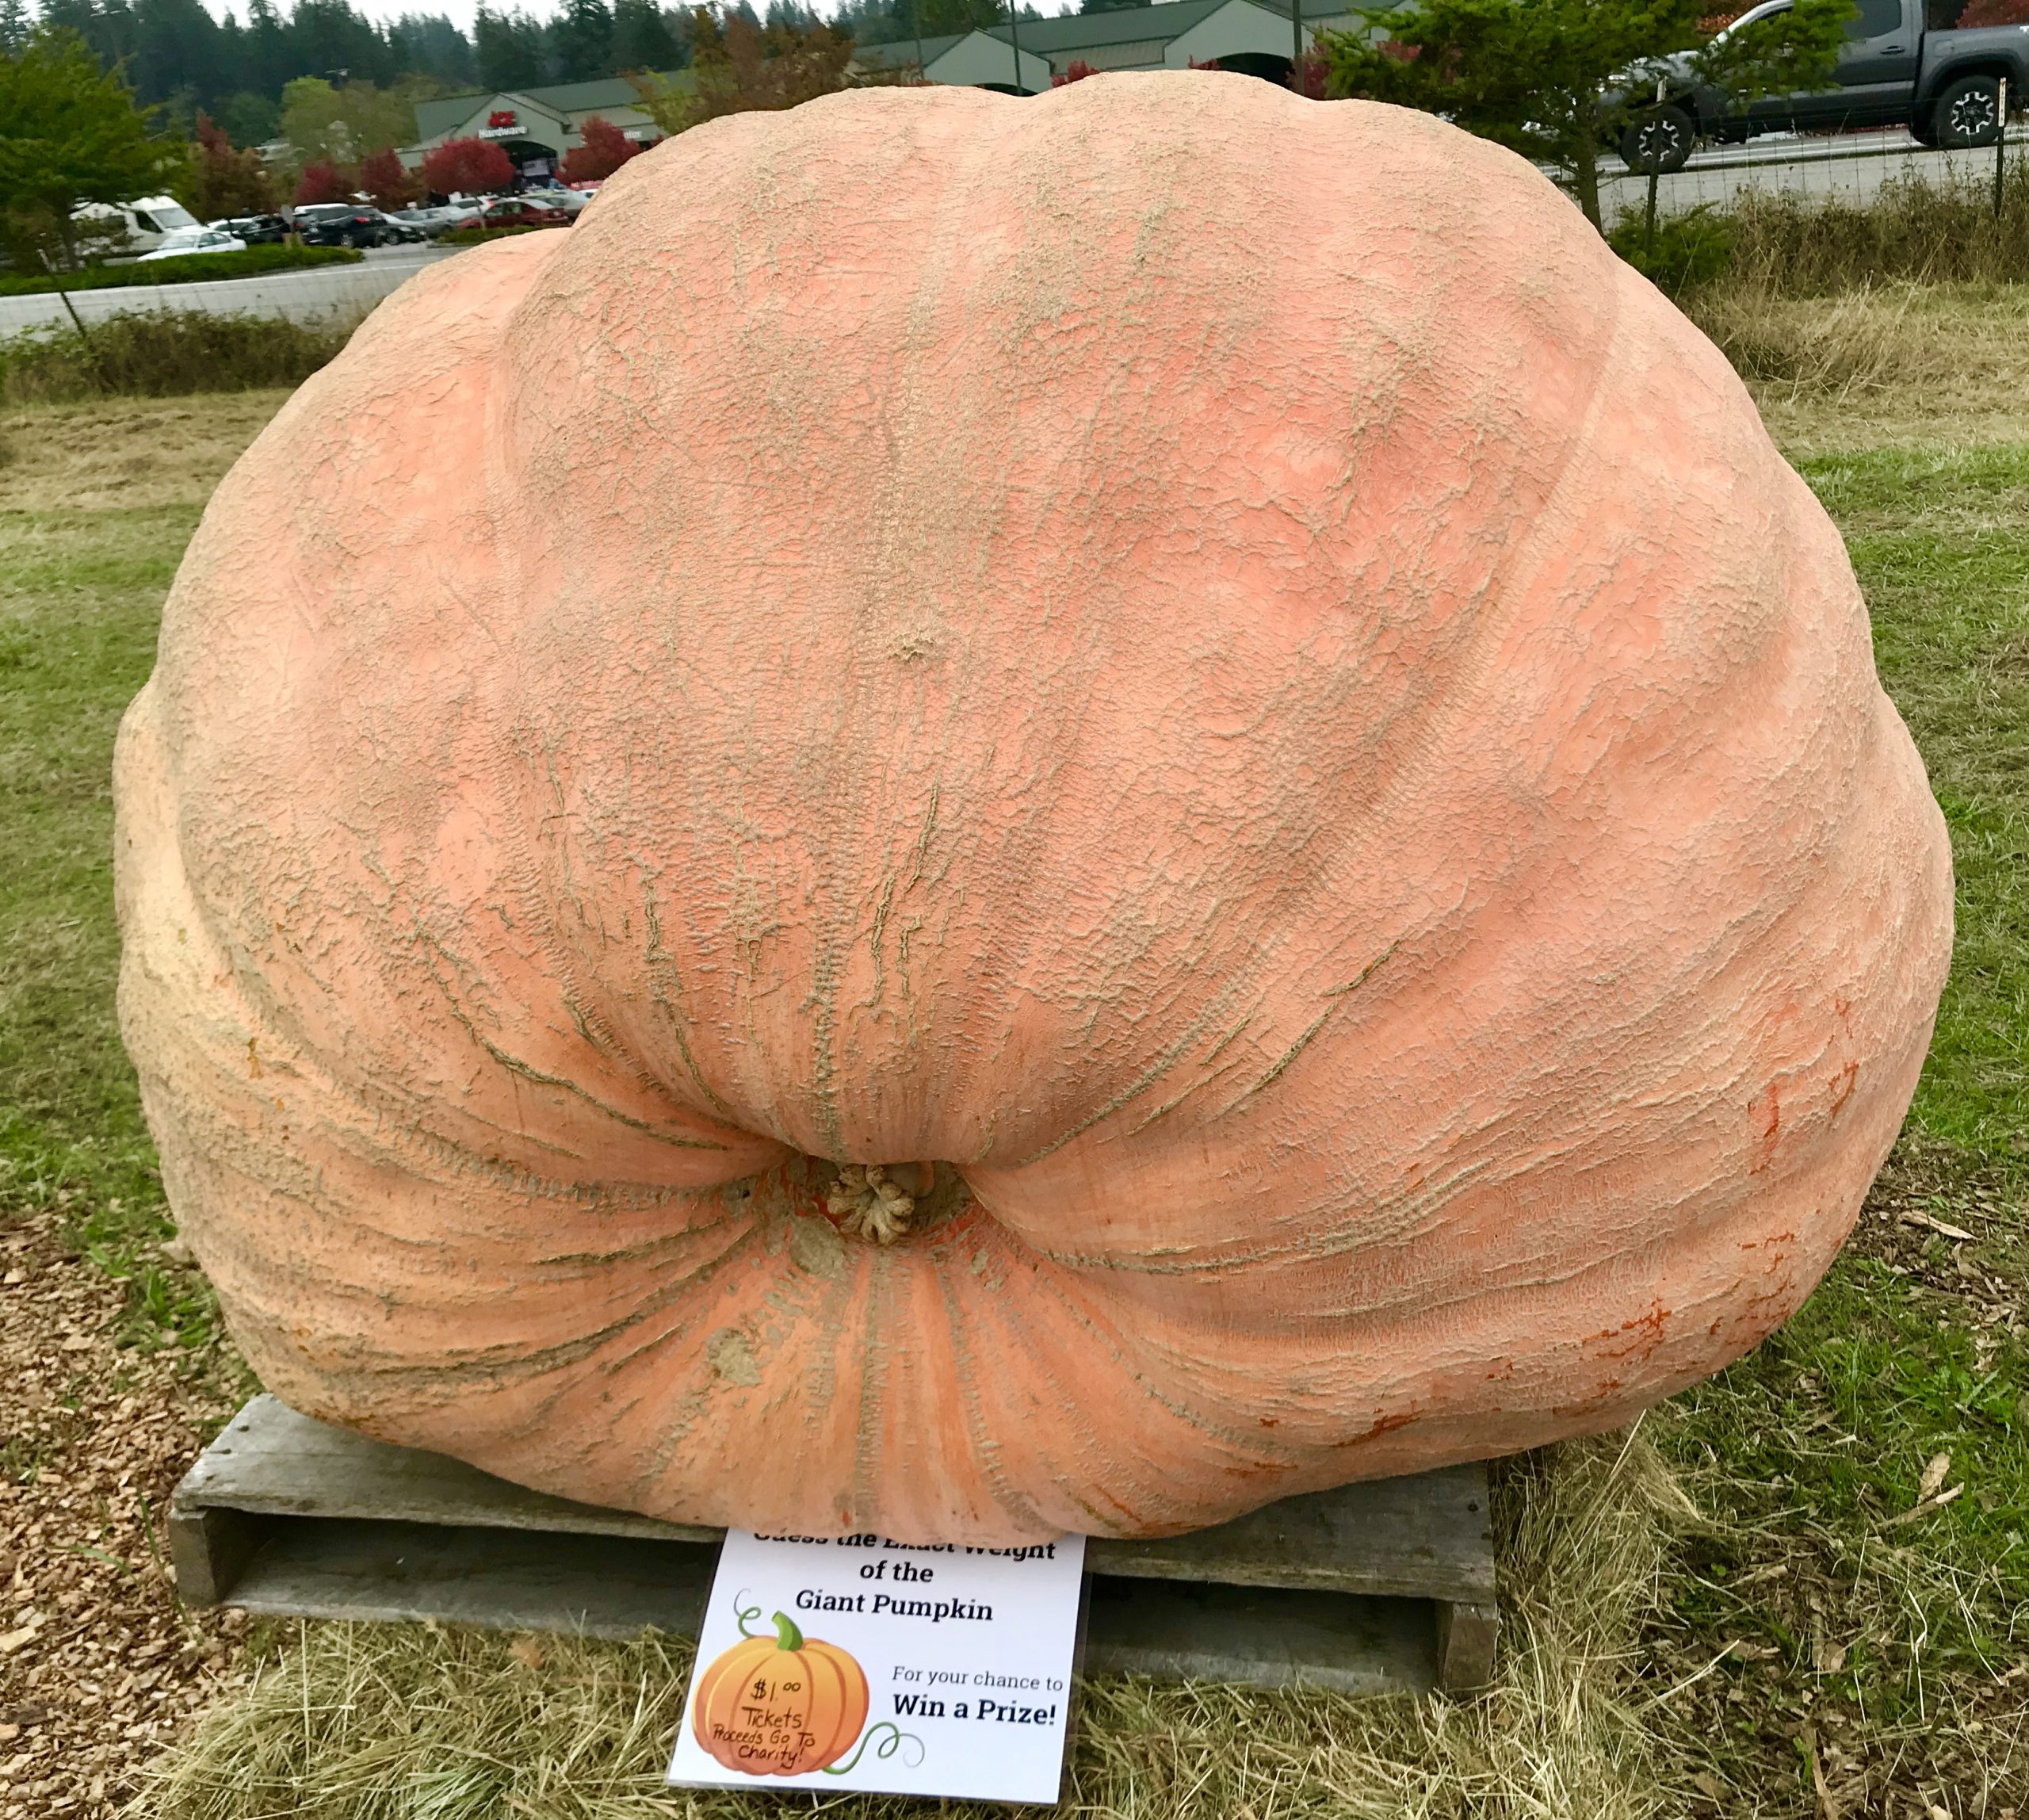 Giant Pumpkins through 10/31